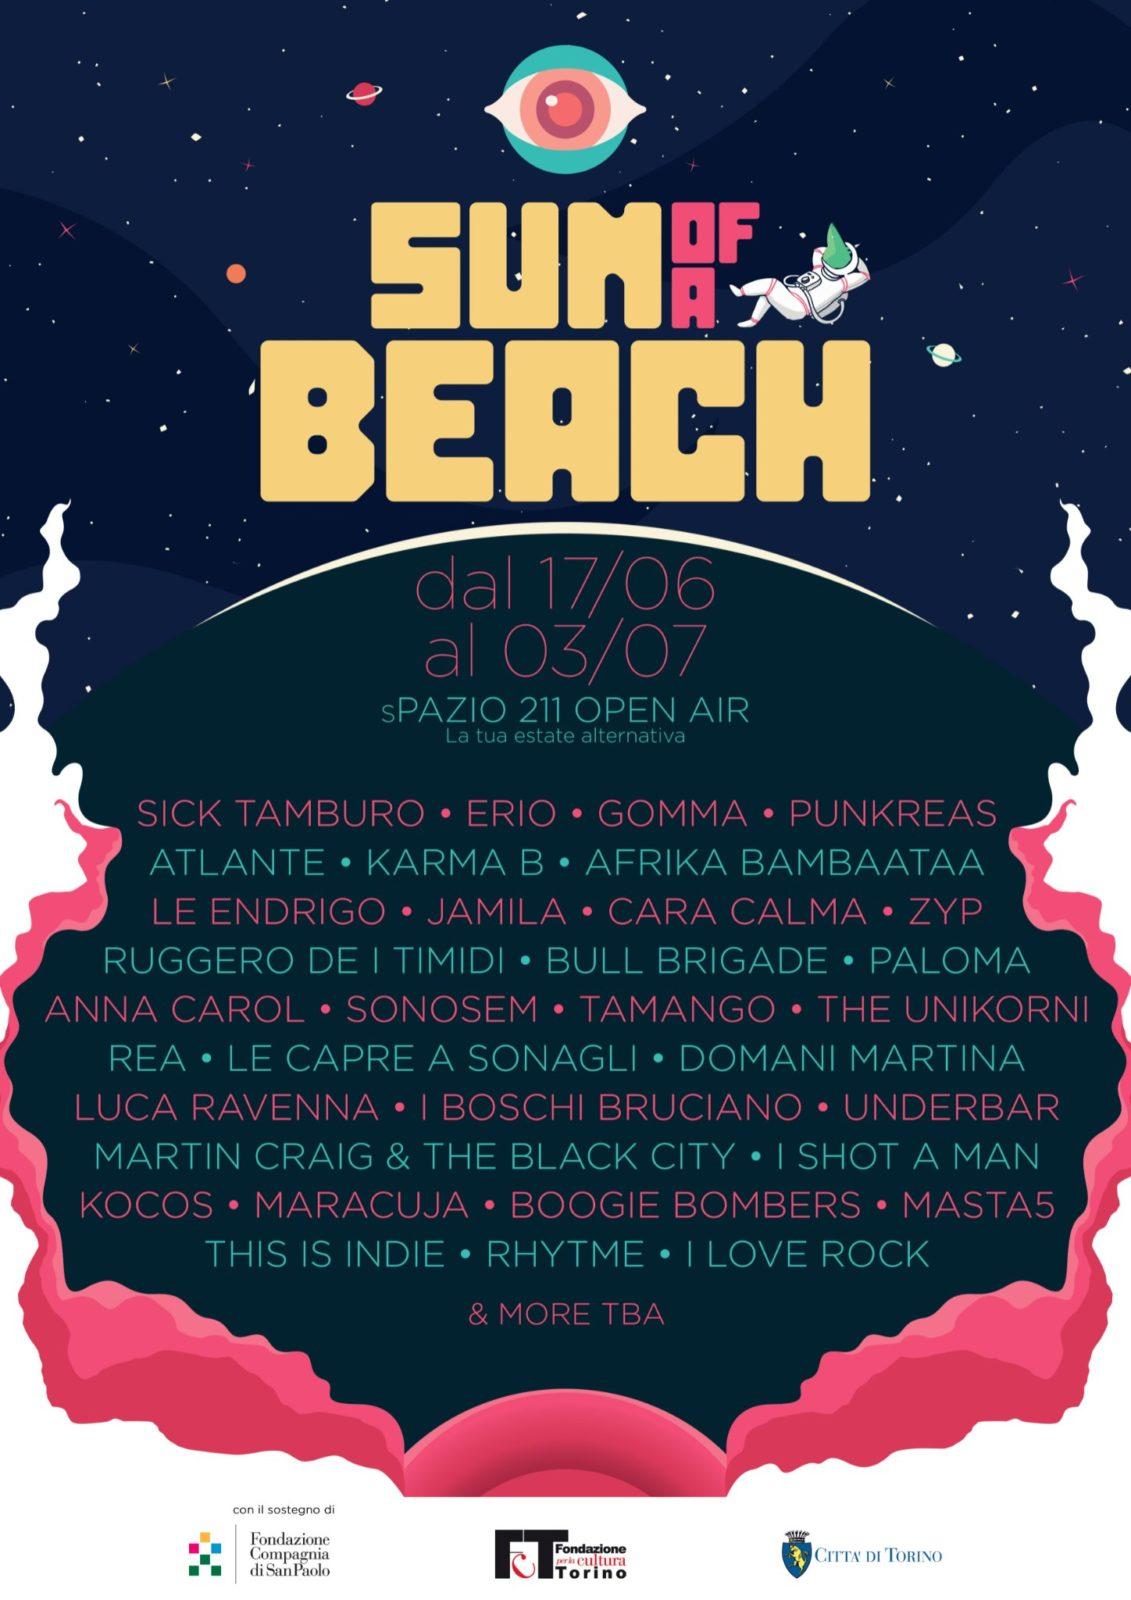 Sun of a beach - Estate a Torino allo Spazio211